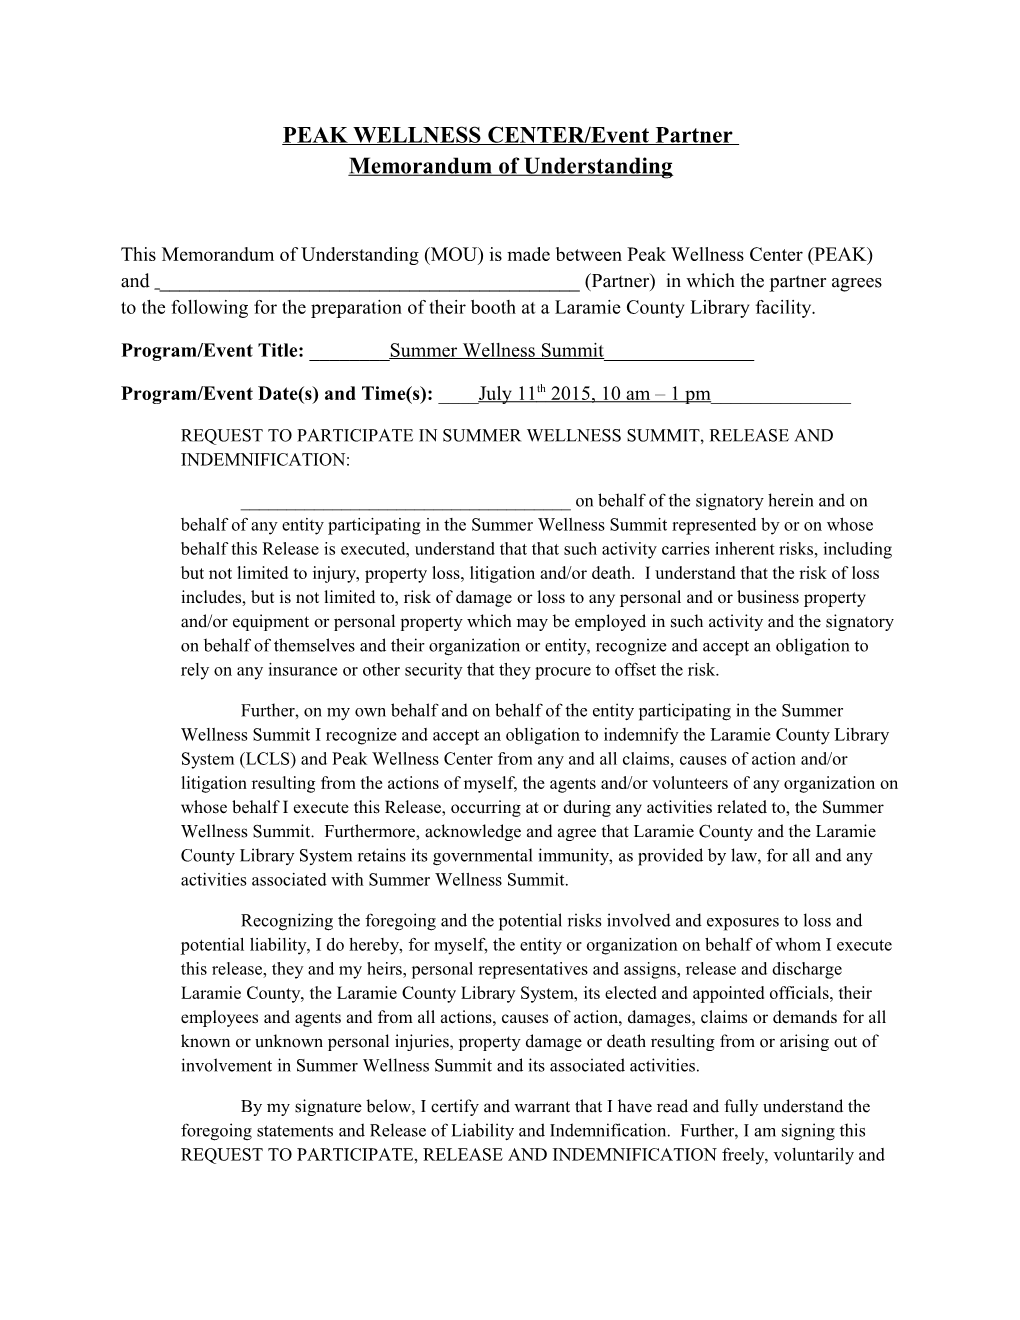 PEAK WELLNESS CENTER/Event Partner Memorandum of Understanding